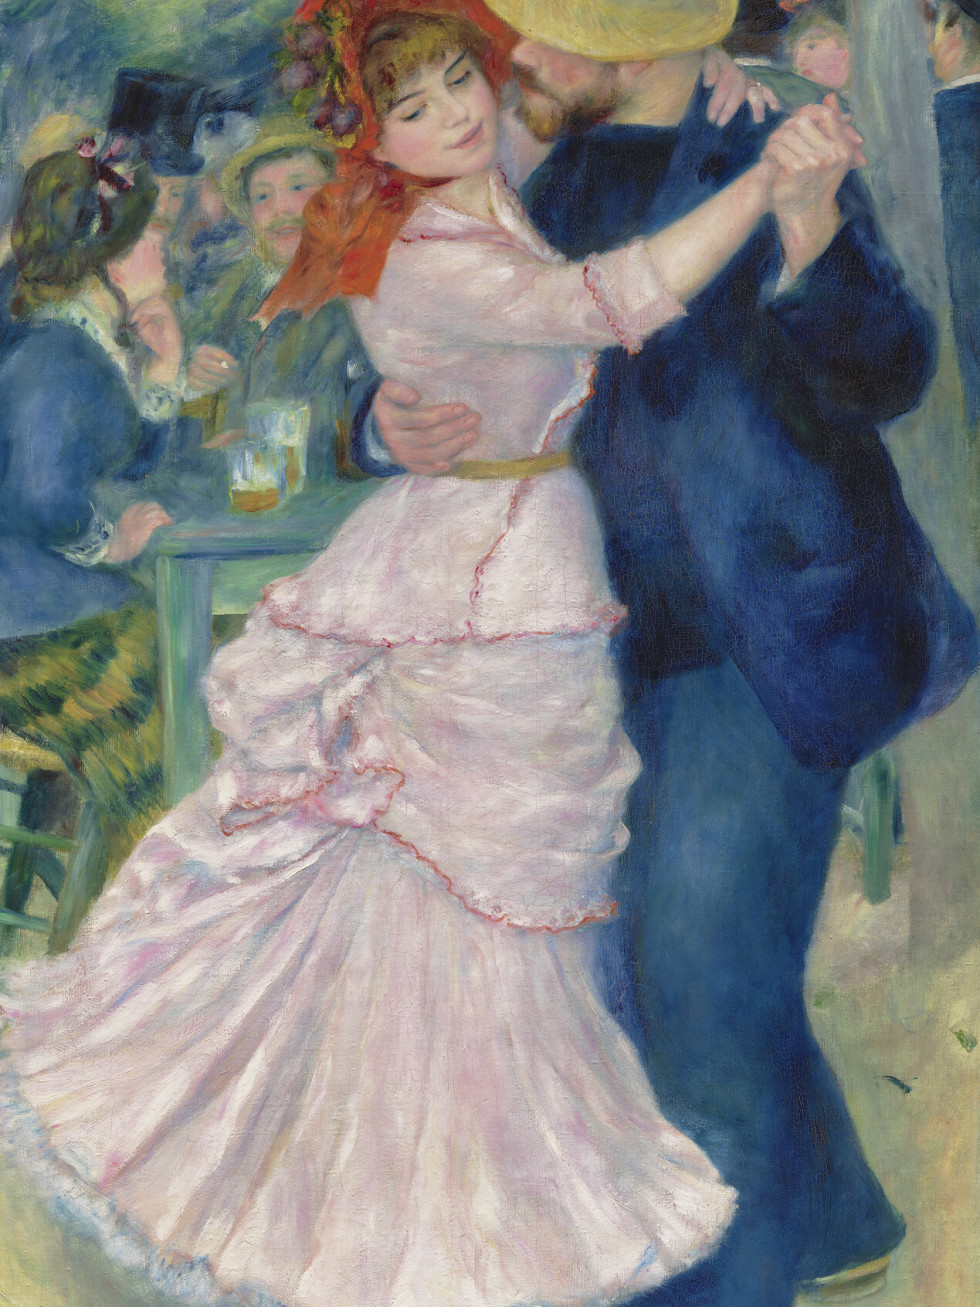 Pierre-Auguste Renoir, Dance at Bougival, 1883, oil on canvas, Museum of Fine Arts, Boston